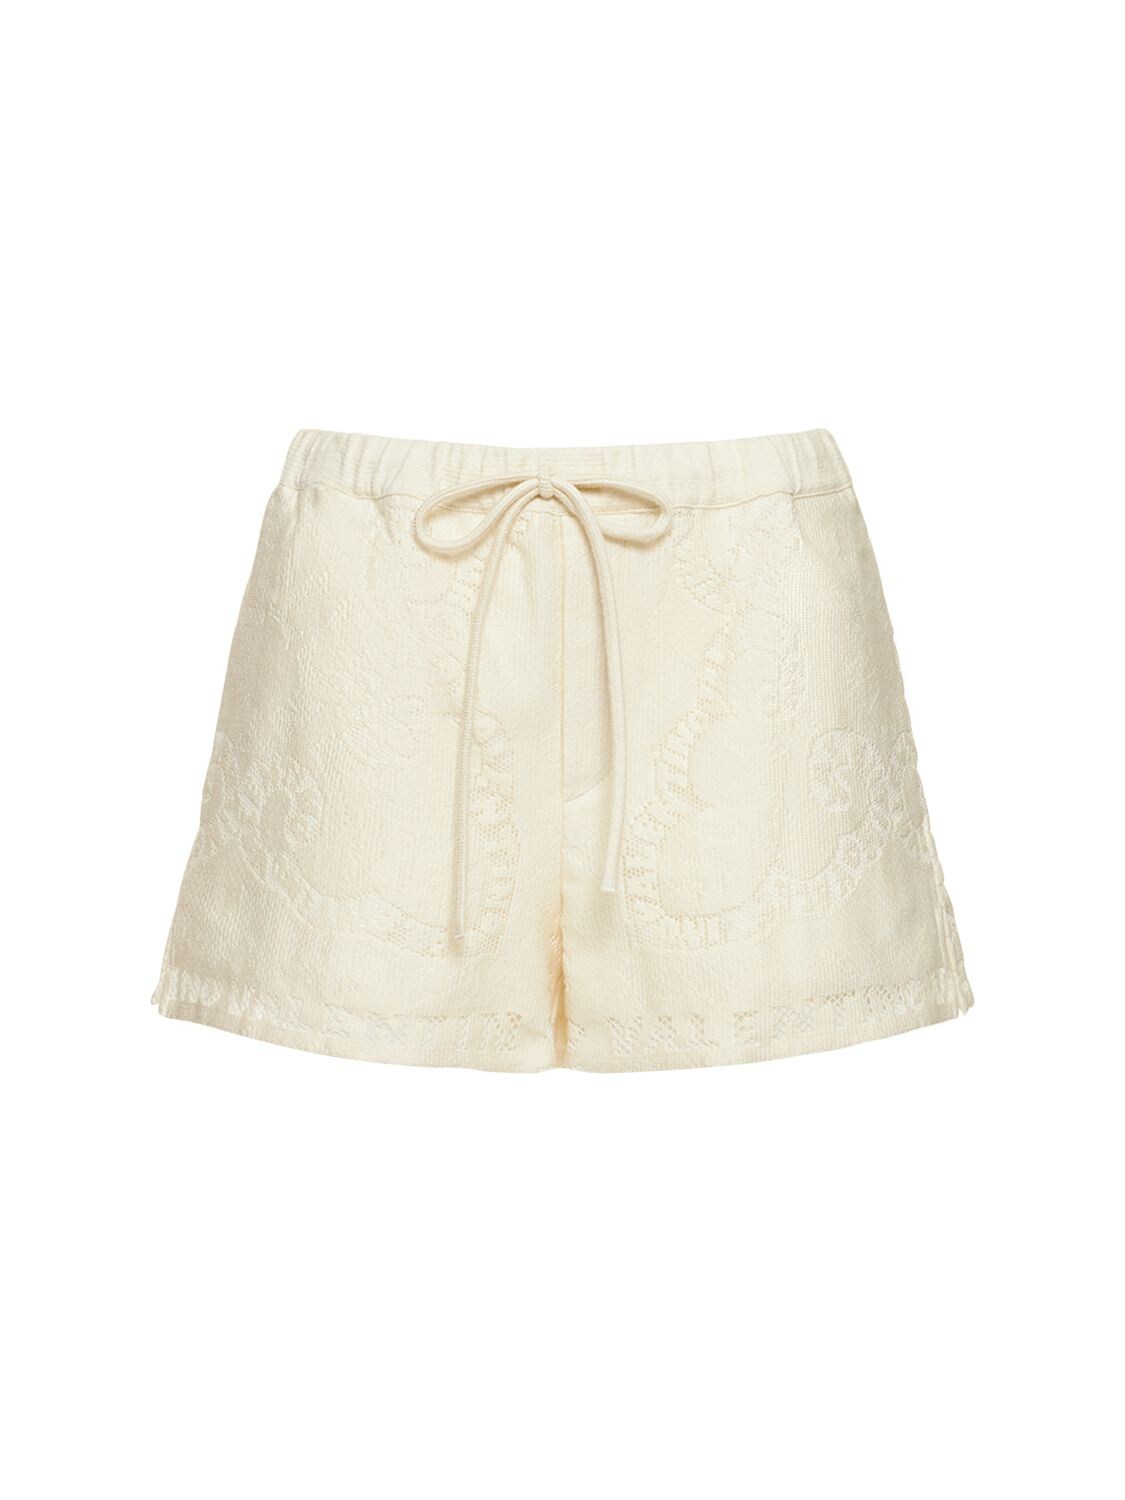 Image of Cotton Guipure Lace Mini Shorts